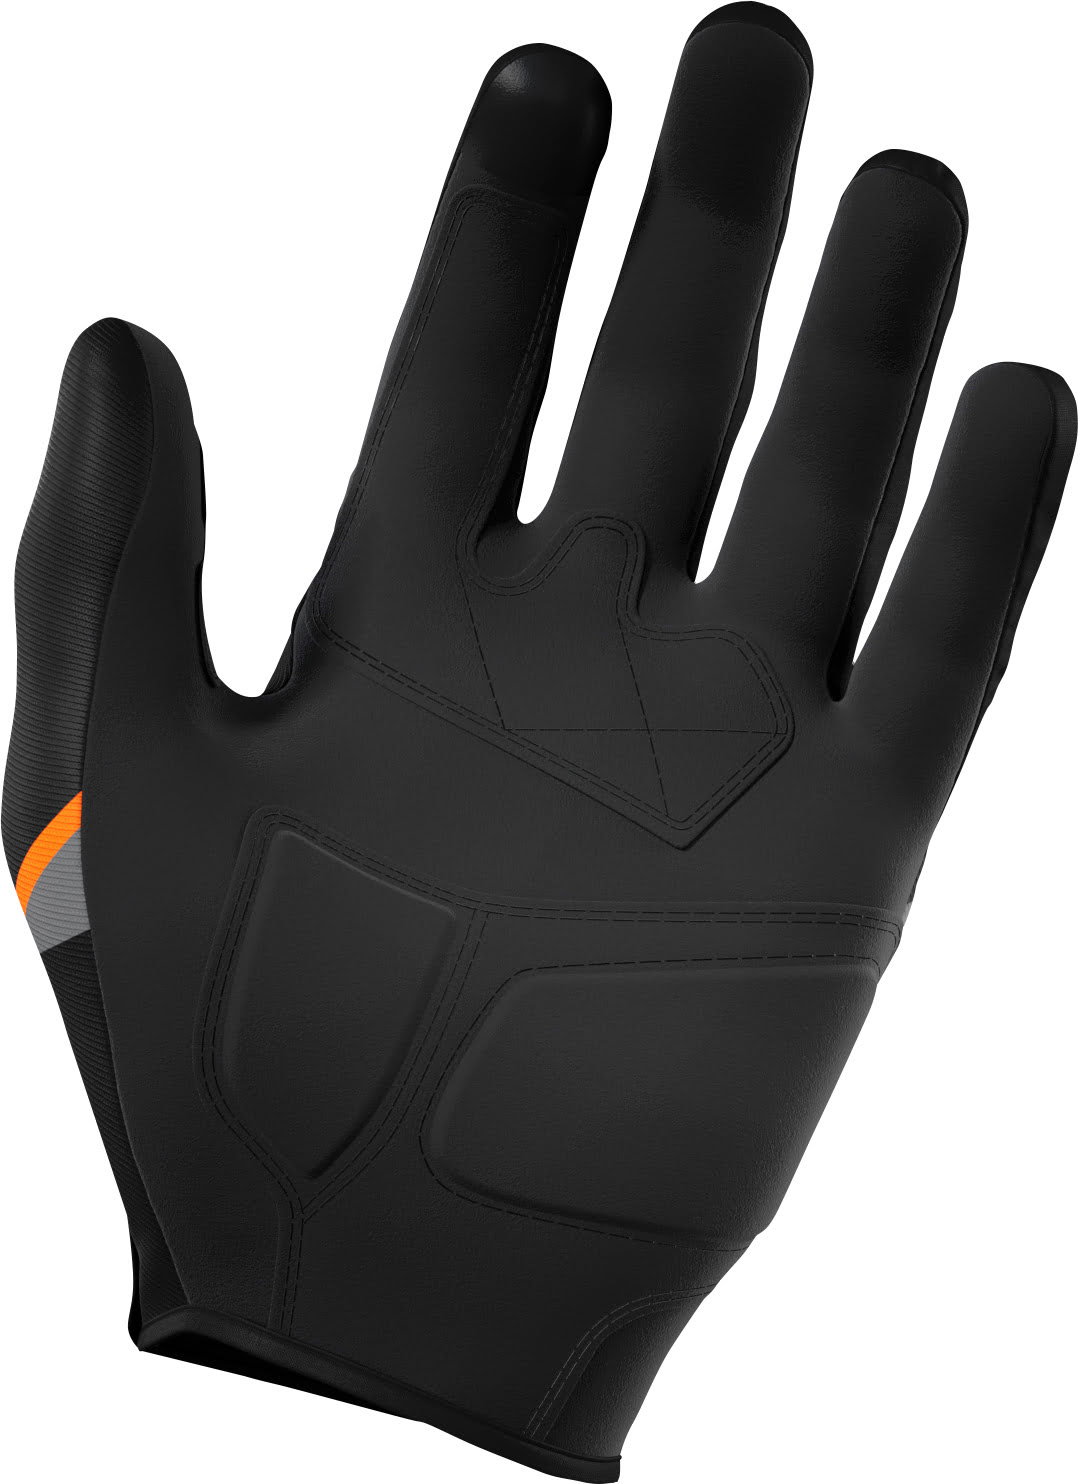 Gloves DRIFT CAMO Camo / Neon Orange SHOT 